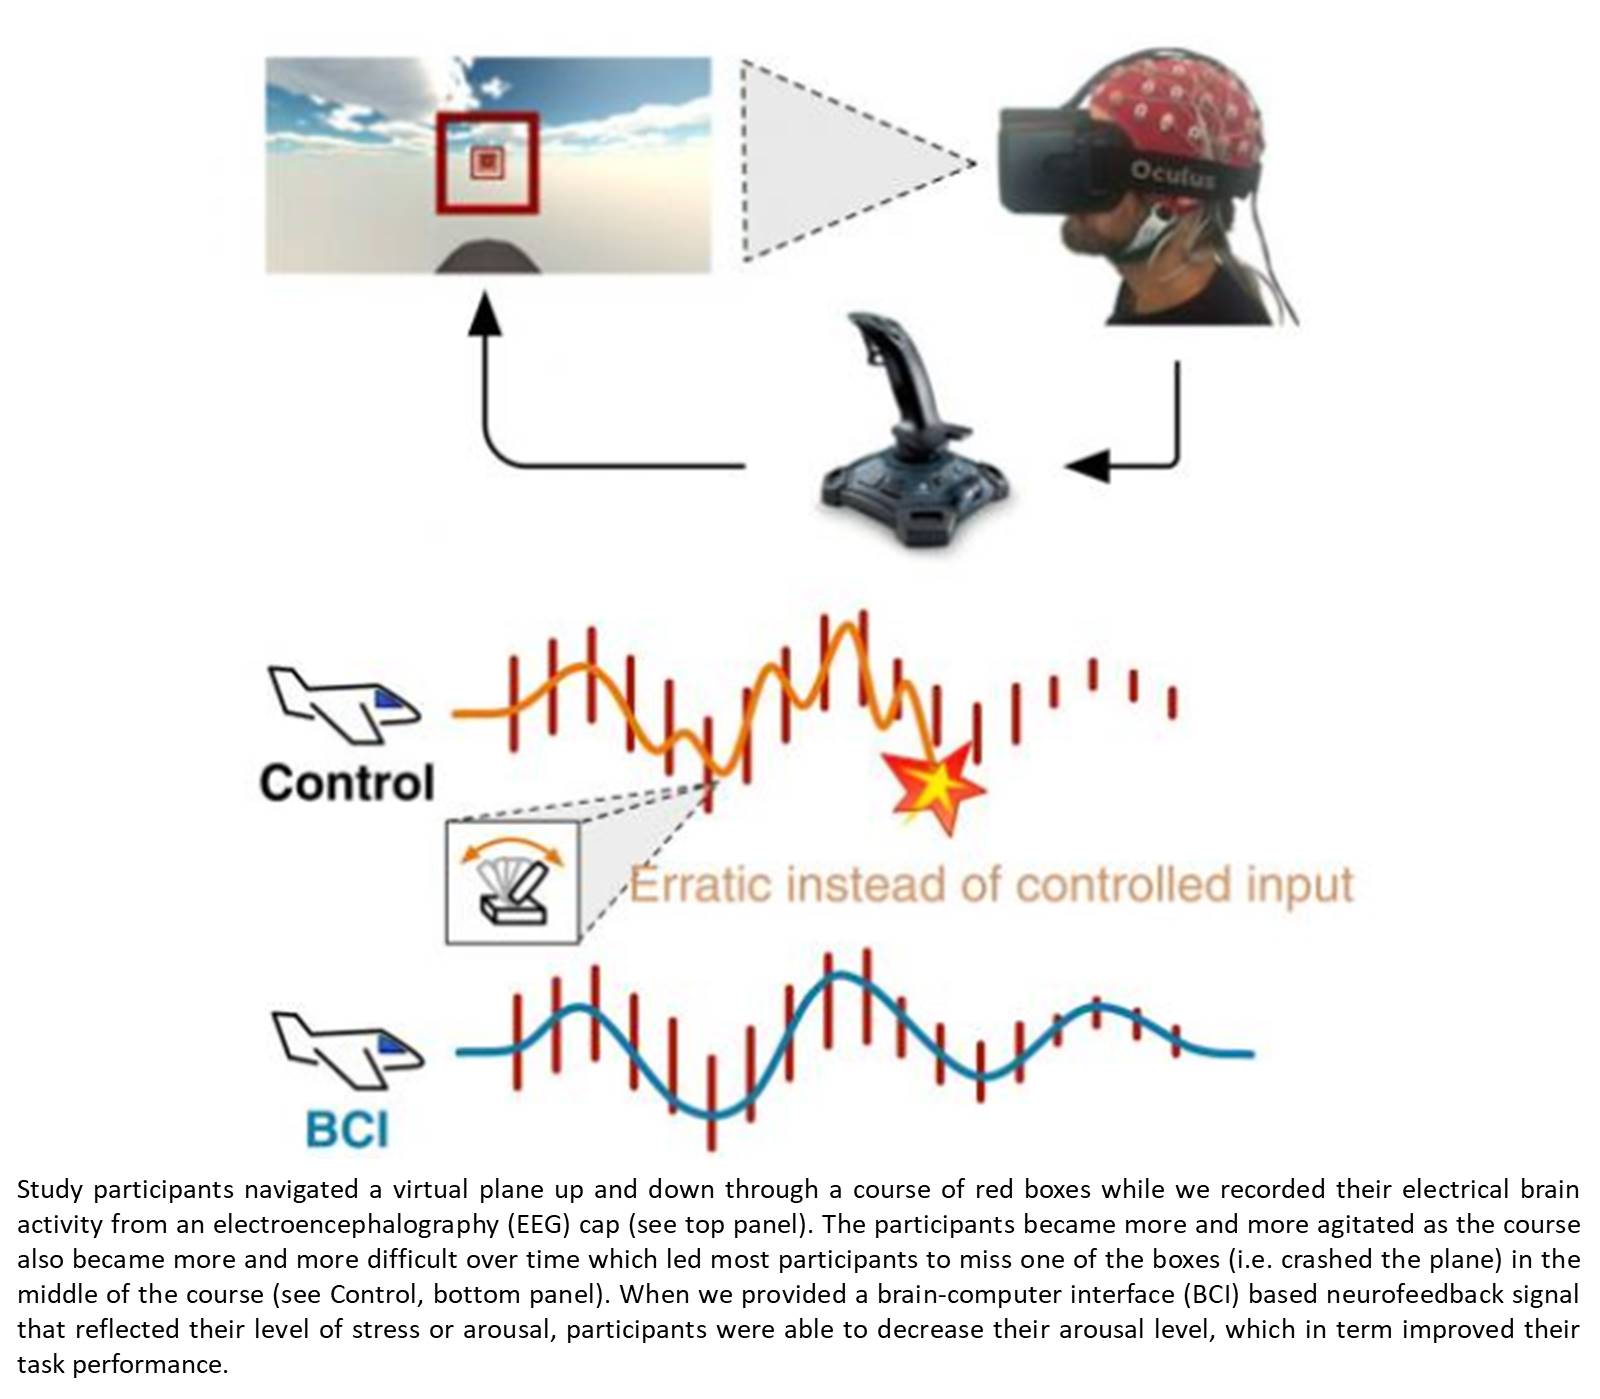 A brain-computer interface (BCI) based neurofeedback to modify an individual&#039;s arousal state